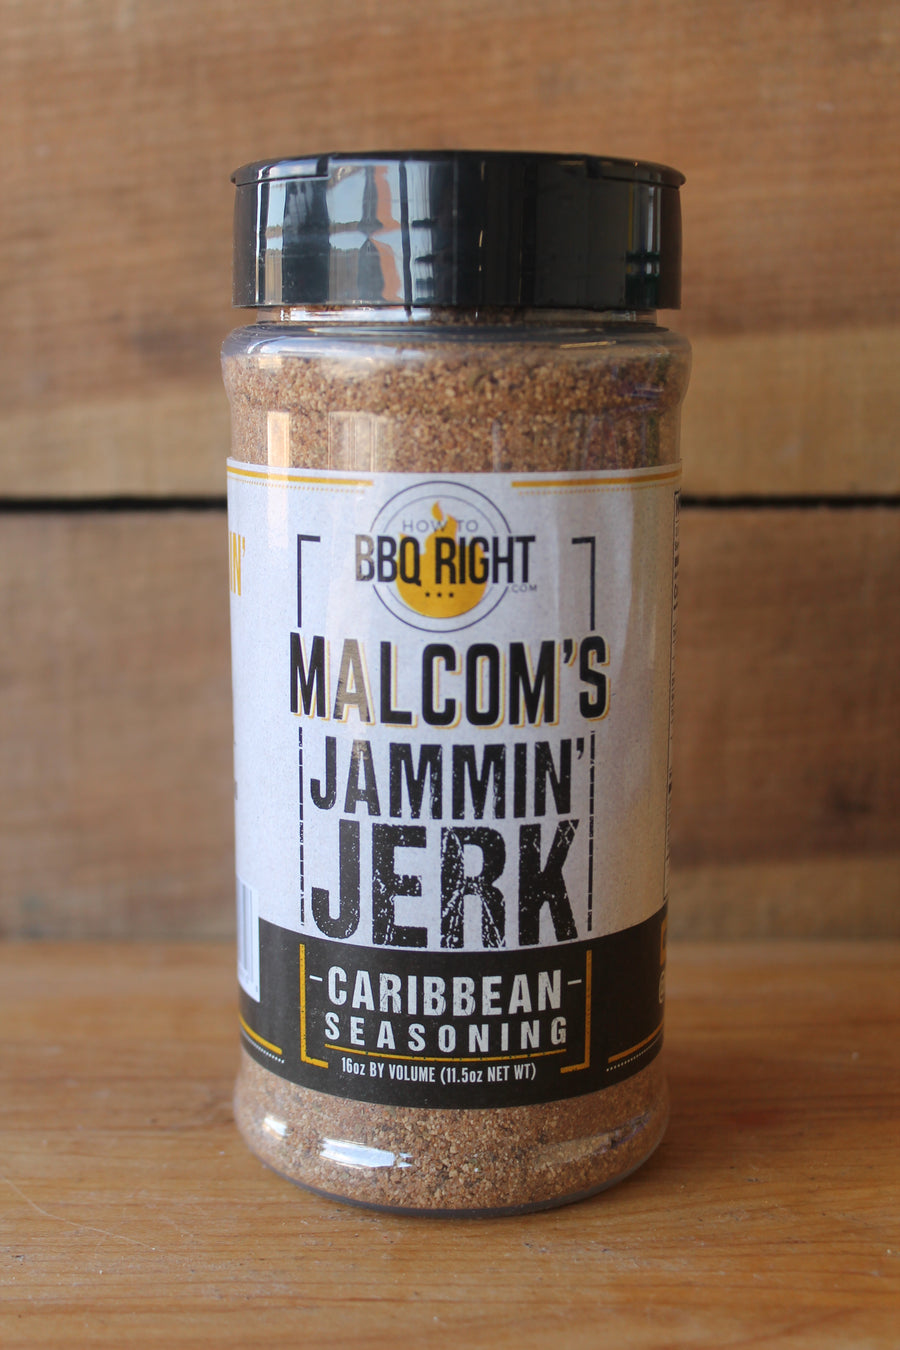 Malcom's "Jammin' Jerk" Caribbean Seasoning